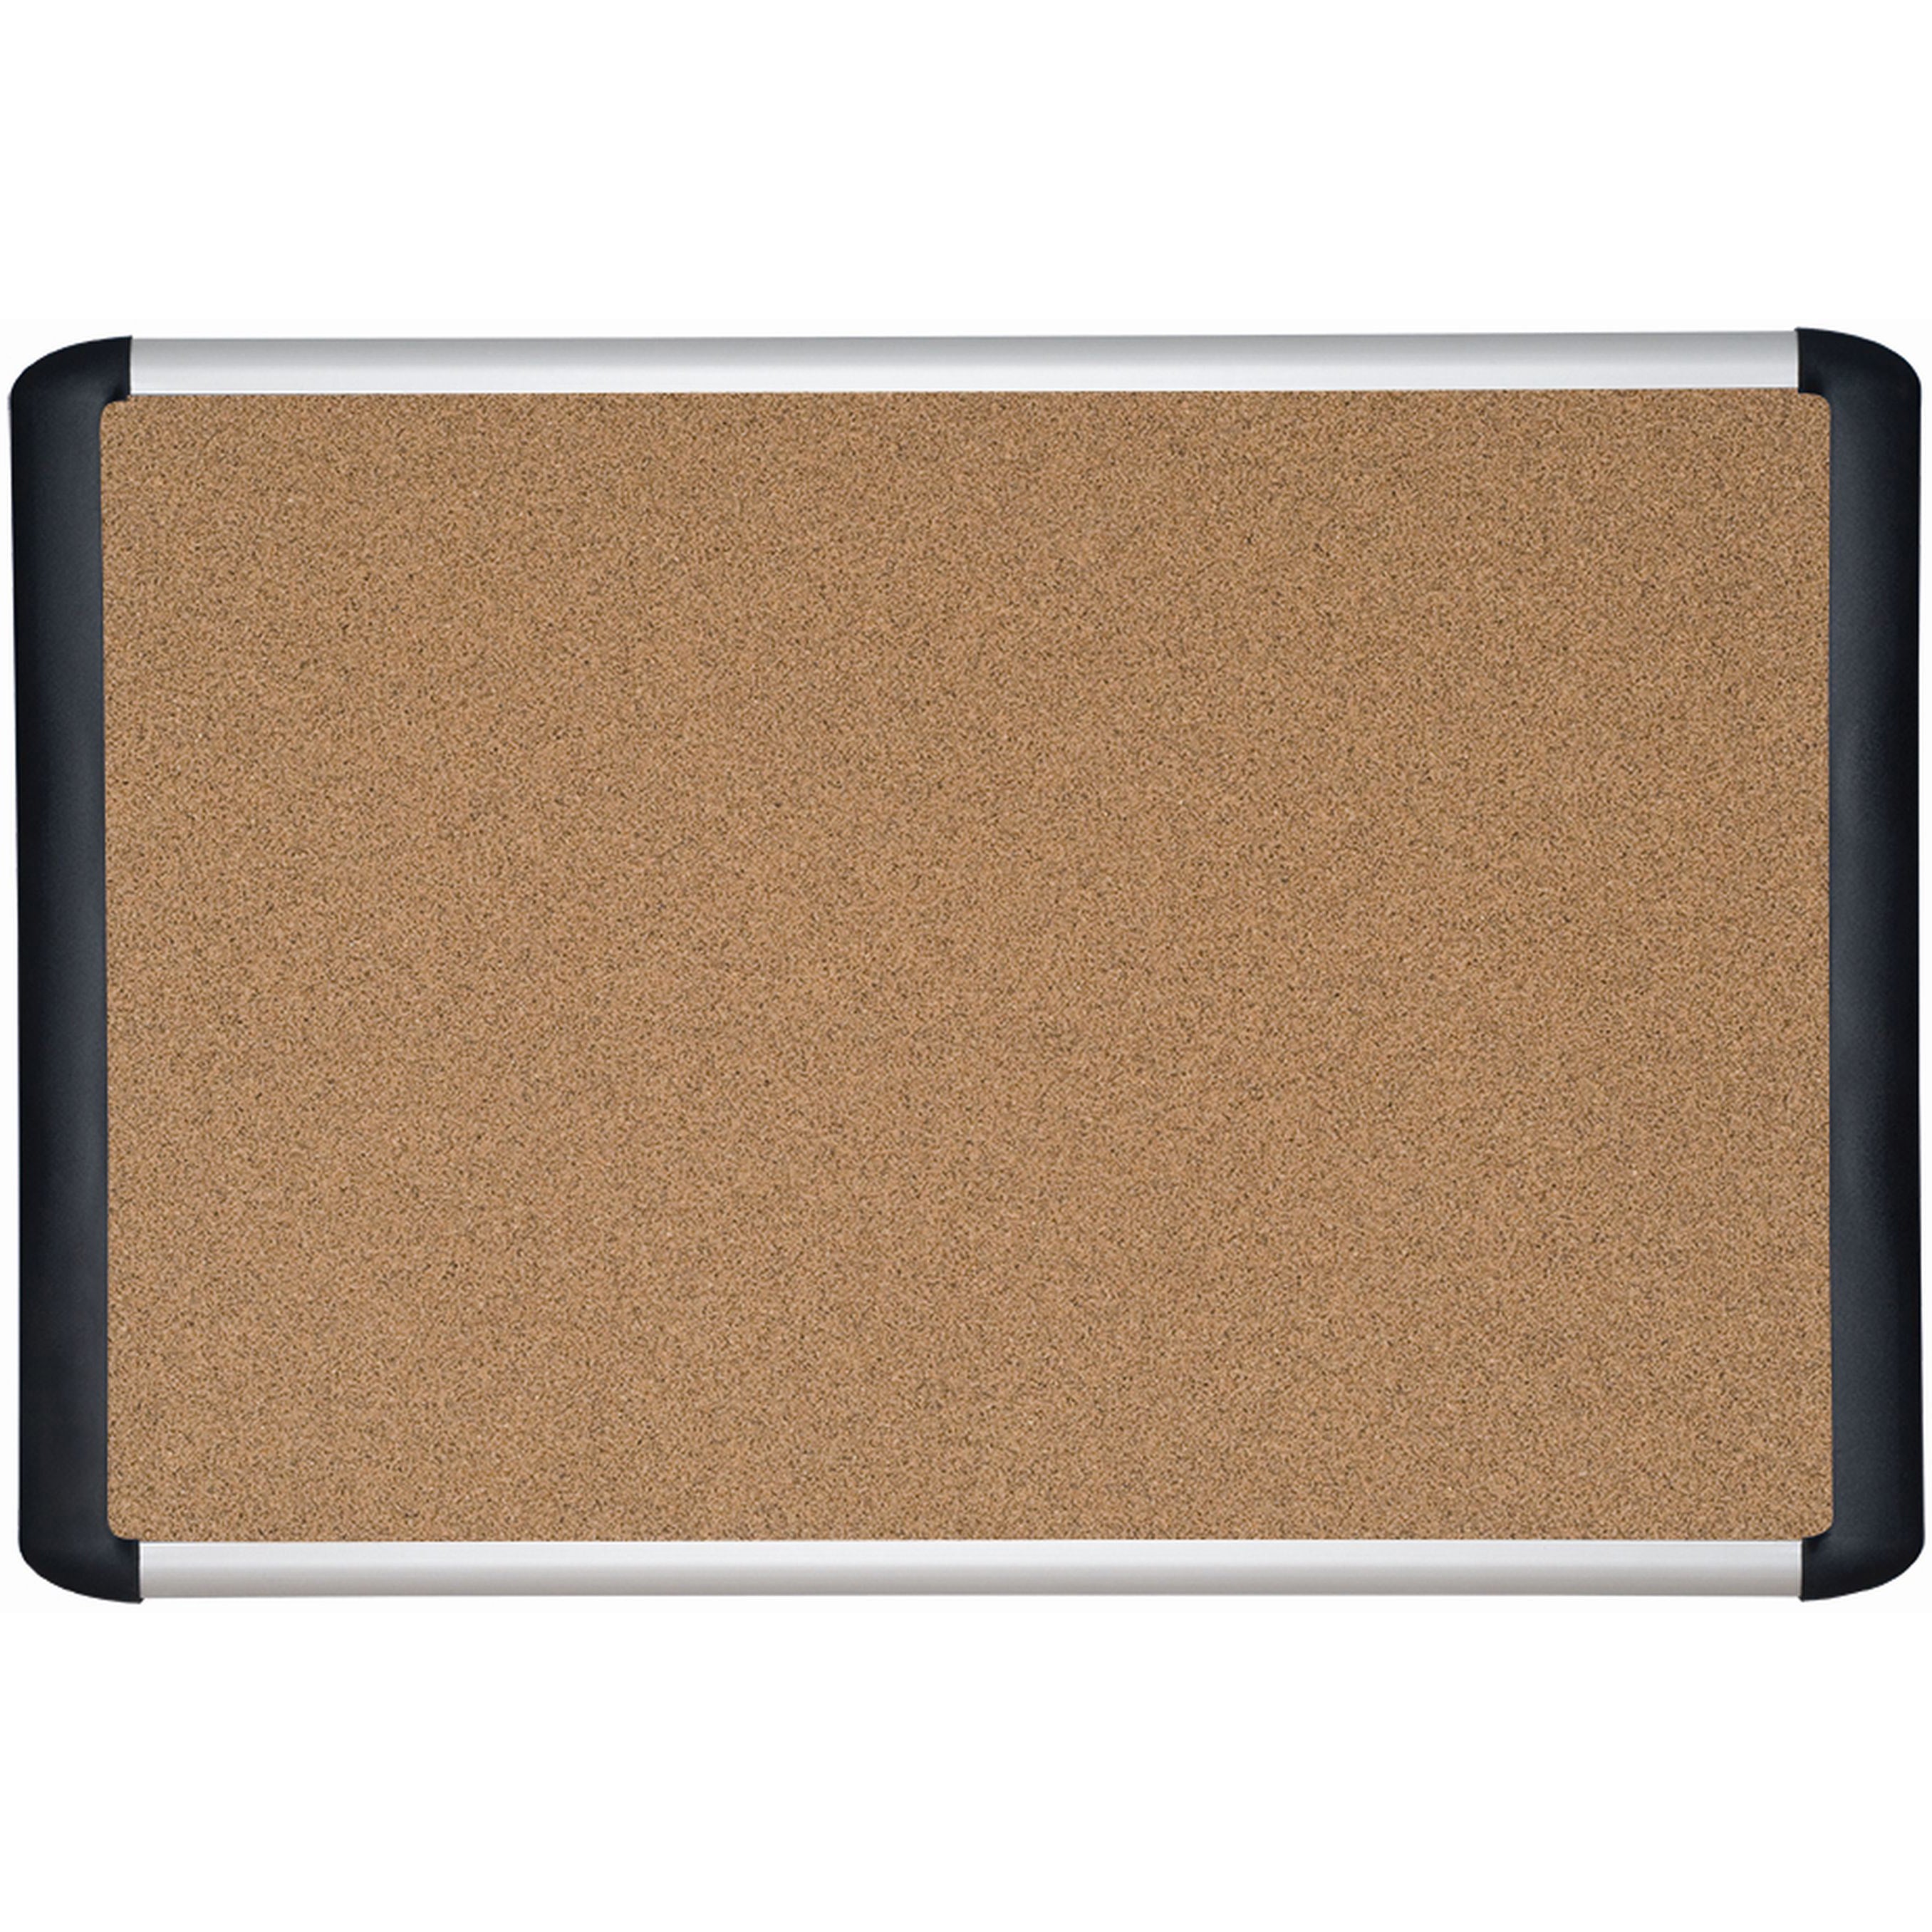 MVI030501 MVI Series Self-Healing Tech Cork Bulletin Board, Wall Mounting Push Pin Cork Board , 24" x 36" by MasterVision